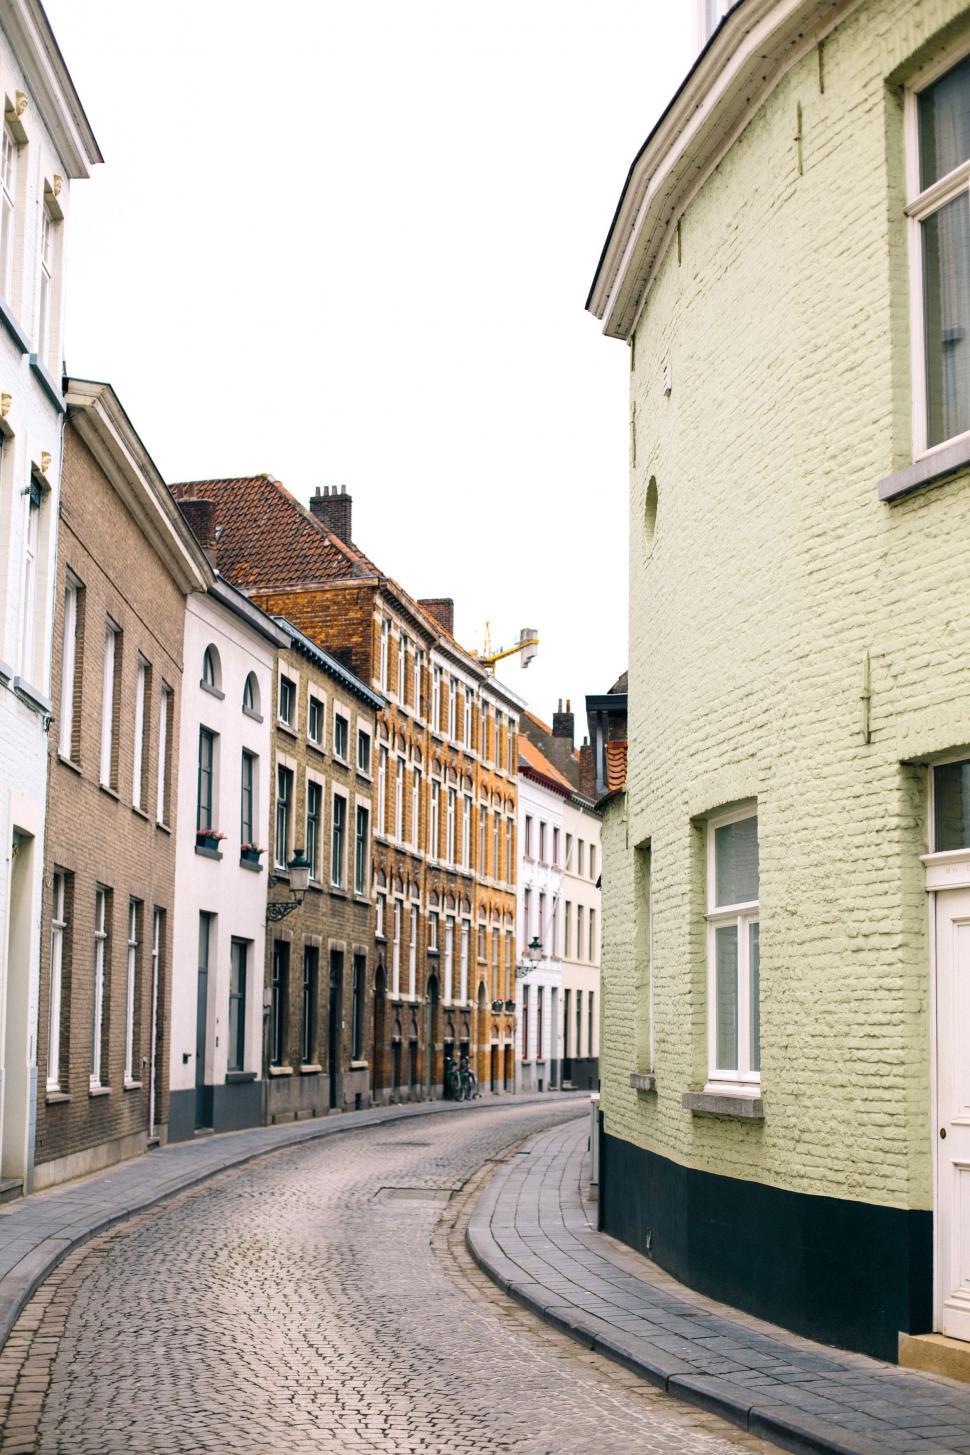 Free Image of Historic Cobblestone Street in European City 